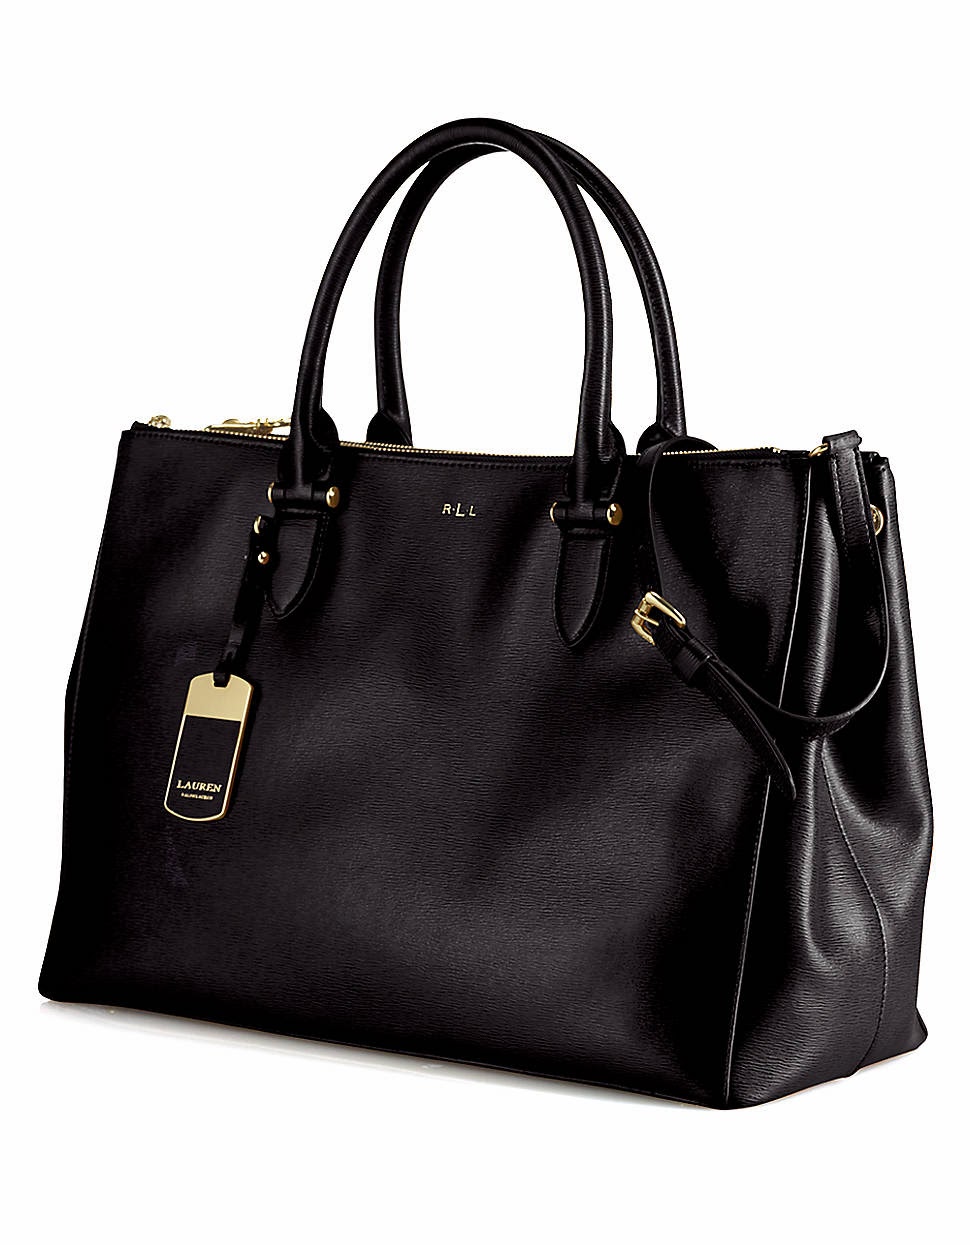 lauren-by-ralph-lauren-black-newbury-leather-doublezip-satchel-product-1-12364027-817449485.jpeg